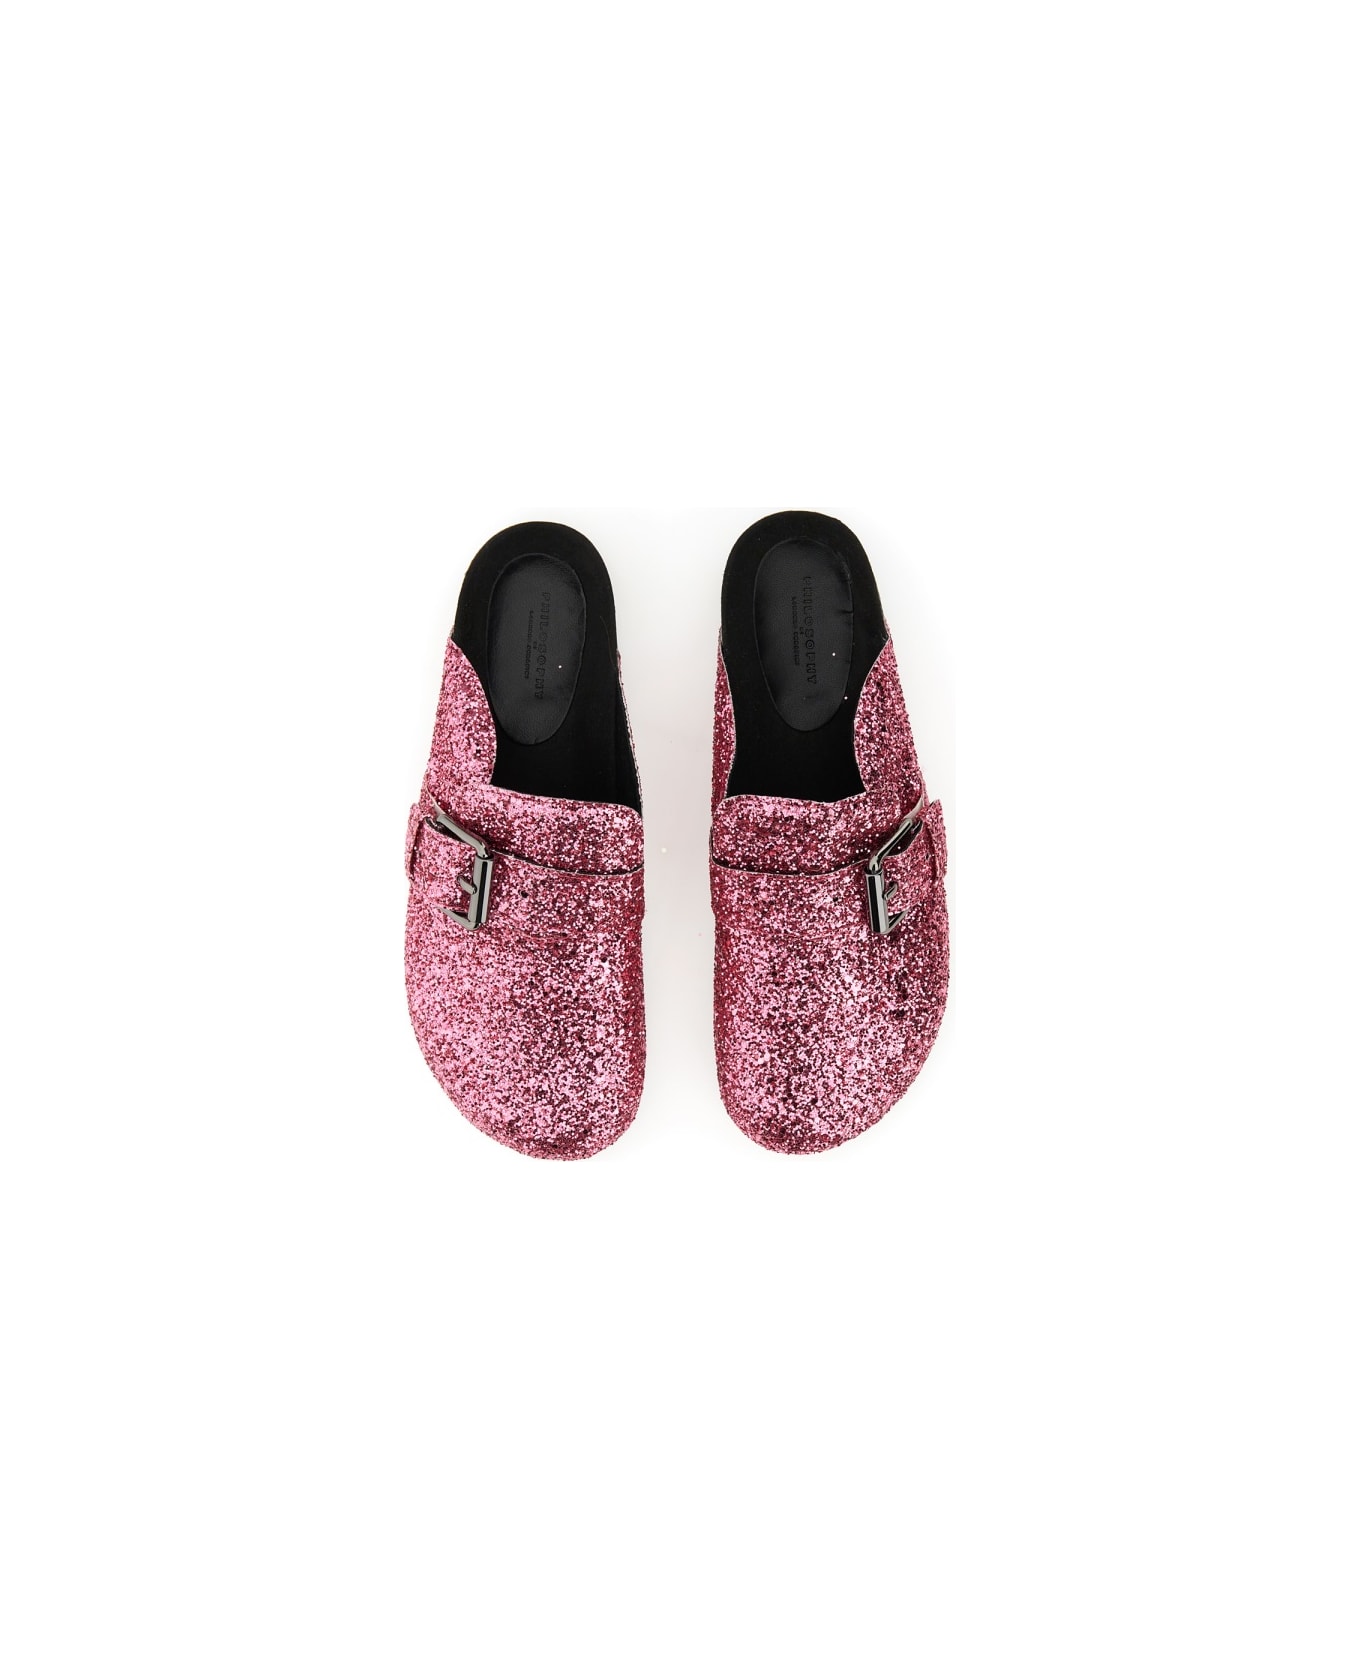 Philosophy di Lorenzo Serafini Sandal With Glitter - Pink